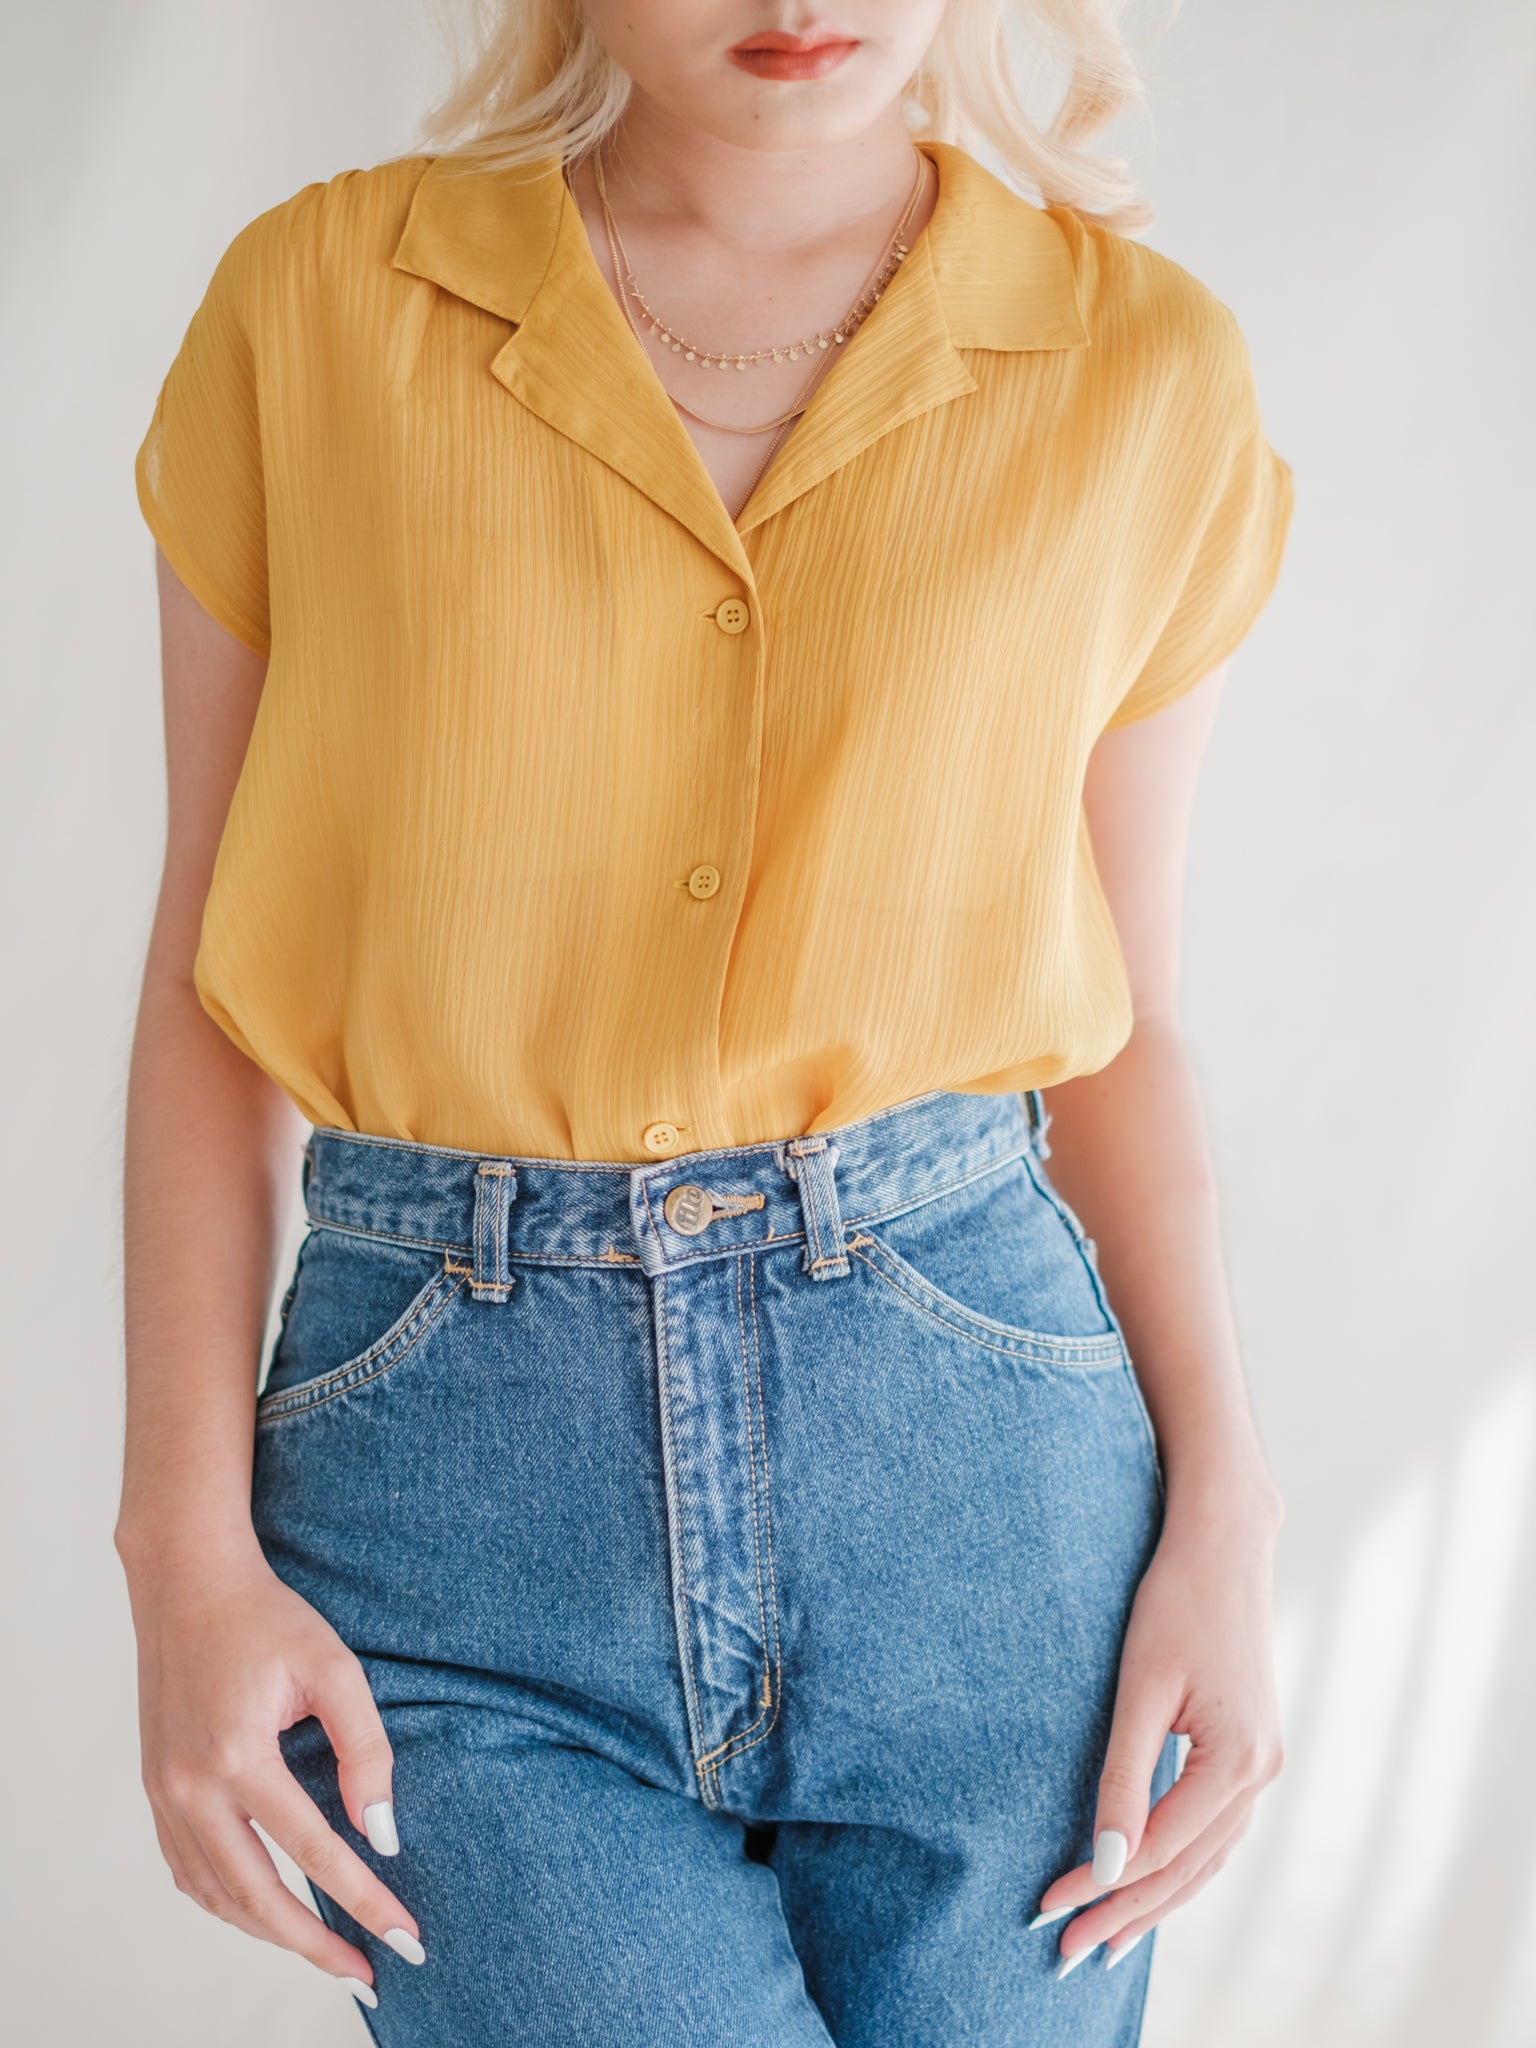 Yellow vintage blouse